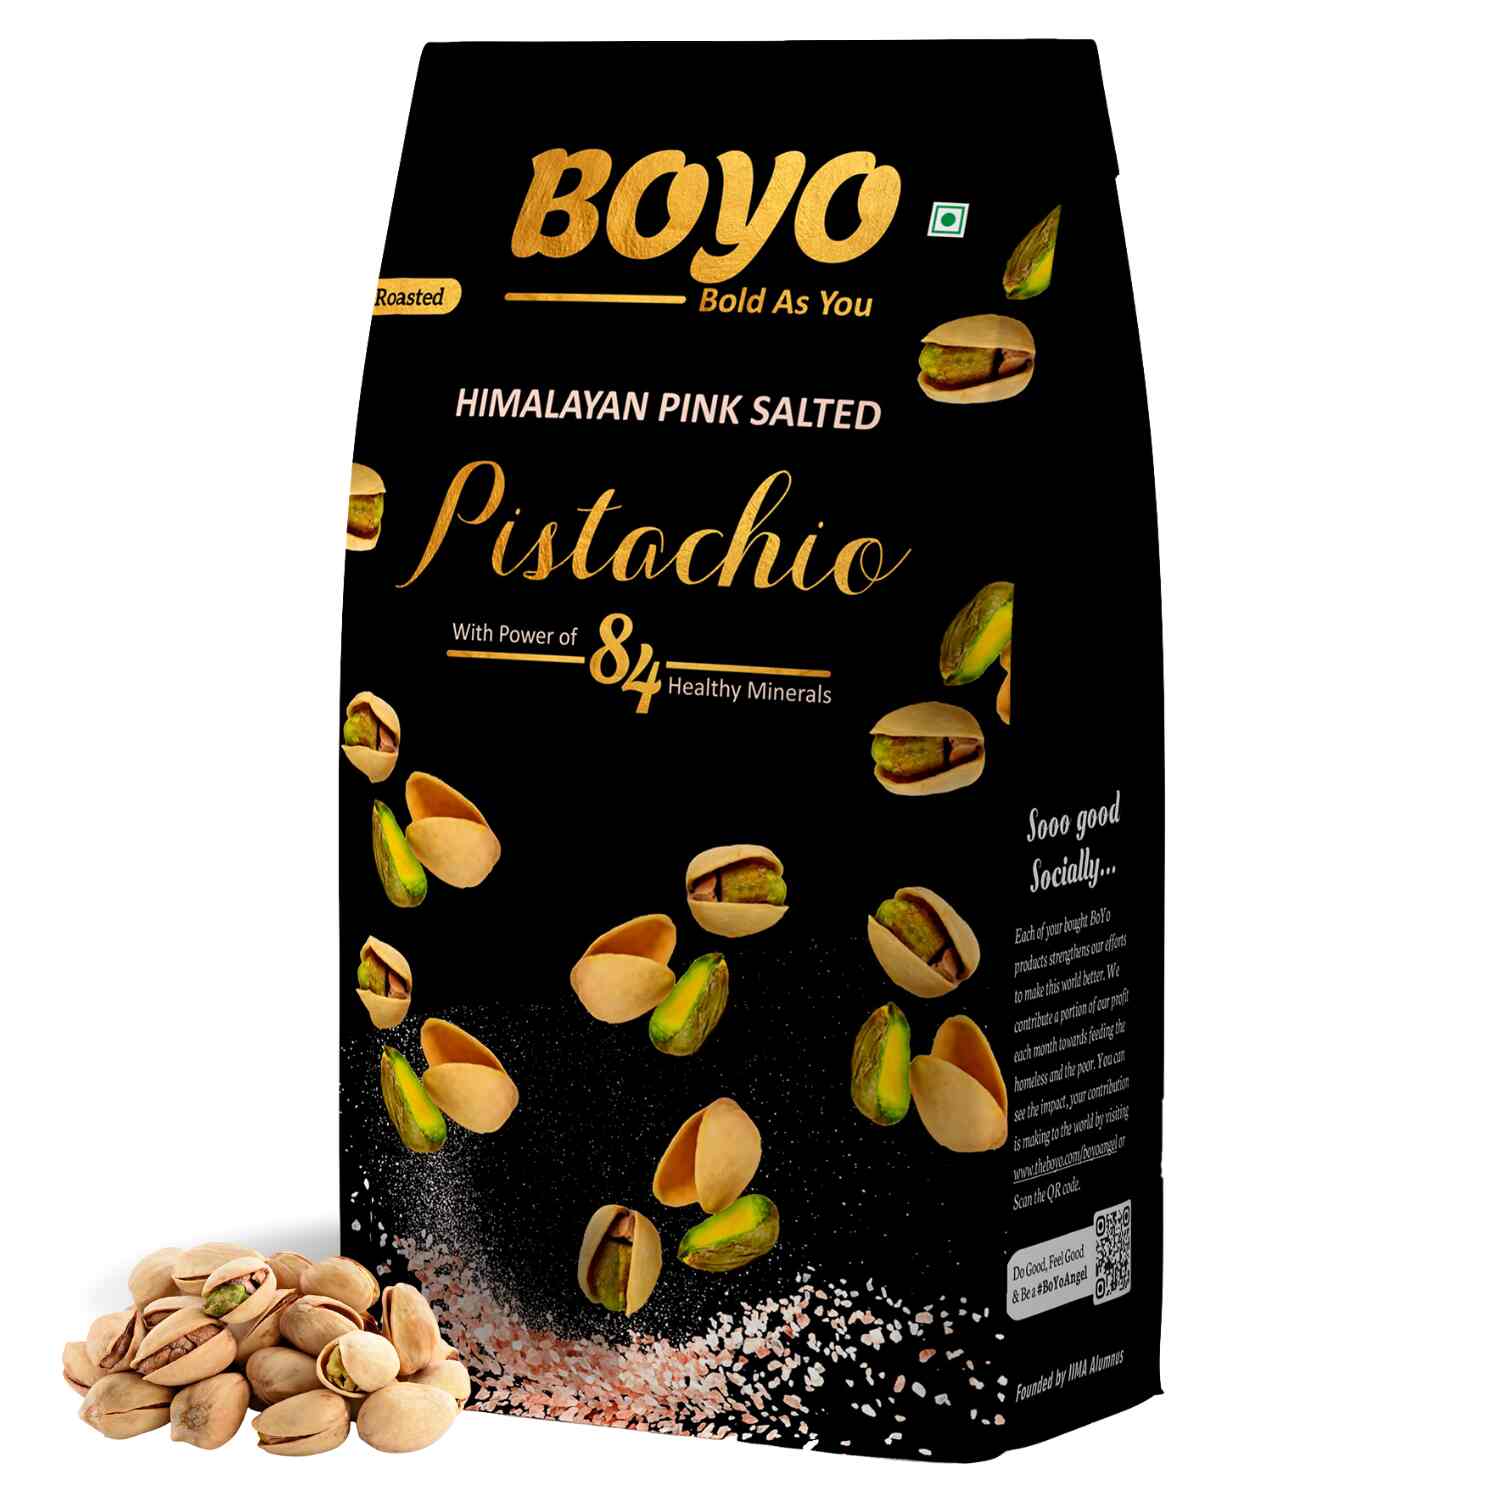 Pistachio, pistachio nuts plant, pistachio benefits, pista nuts tree, badam pista ,pista house near me, benefits of pista,benefits of pista for health, pista colour, pista